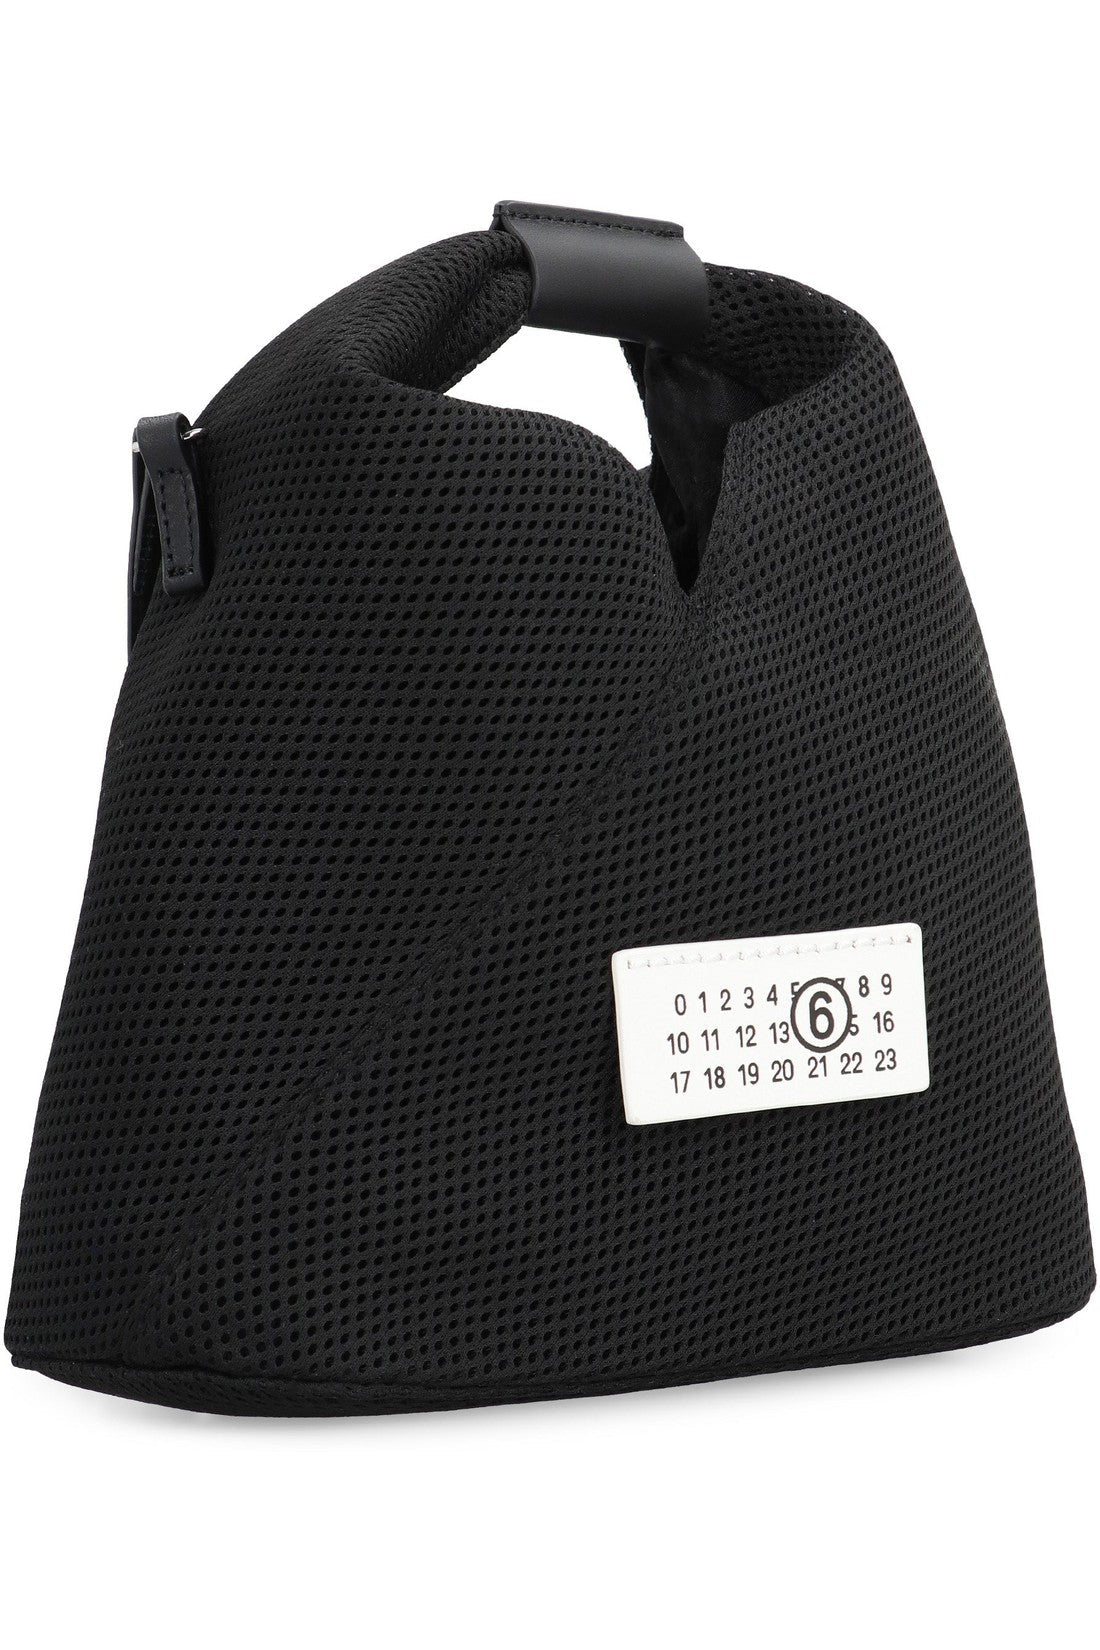 MM6 Maison Margiela-OUTLET-SALE-Japanese small handbag-ARCHIVIST